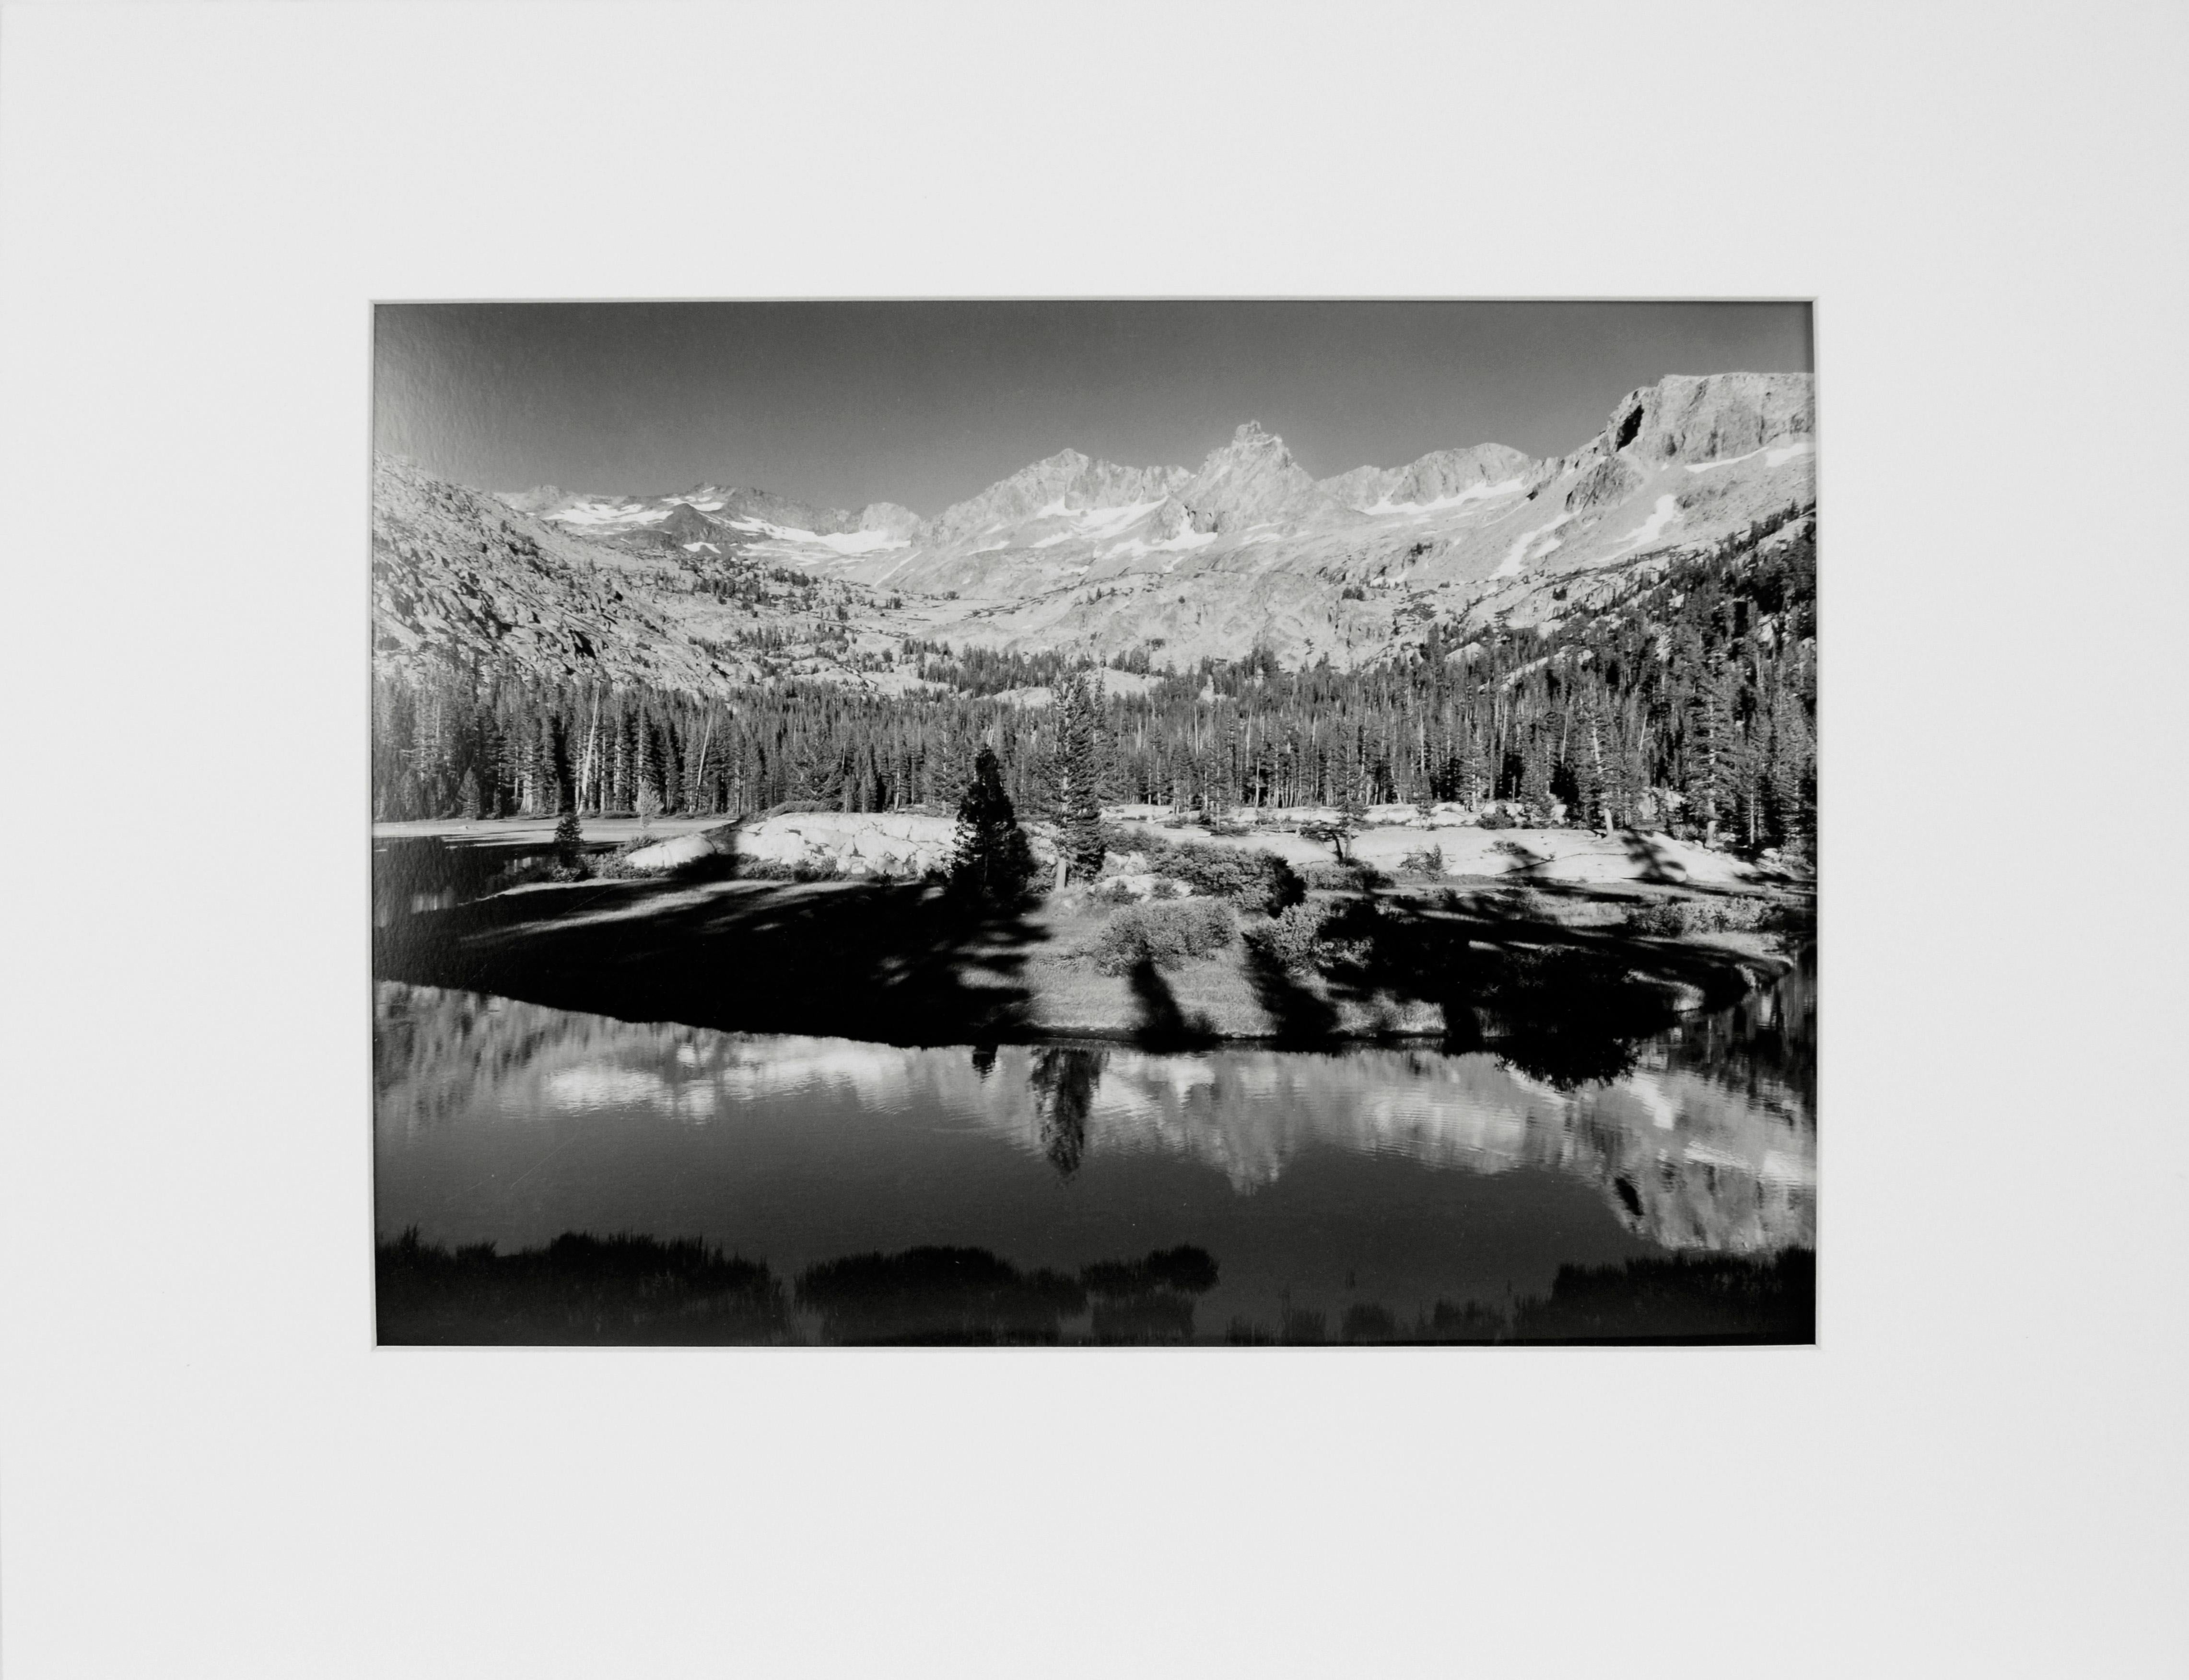 Jeff Nixon Black and White Photograph - "Yosemite" - Black & White Landscape Photograph AP